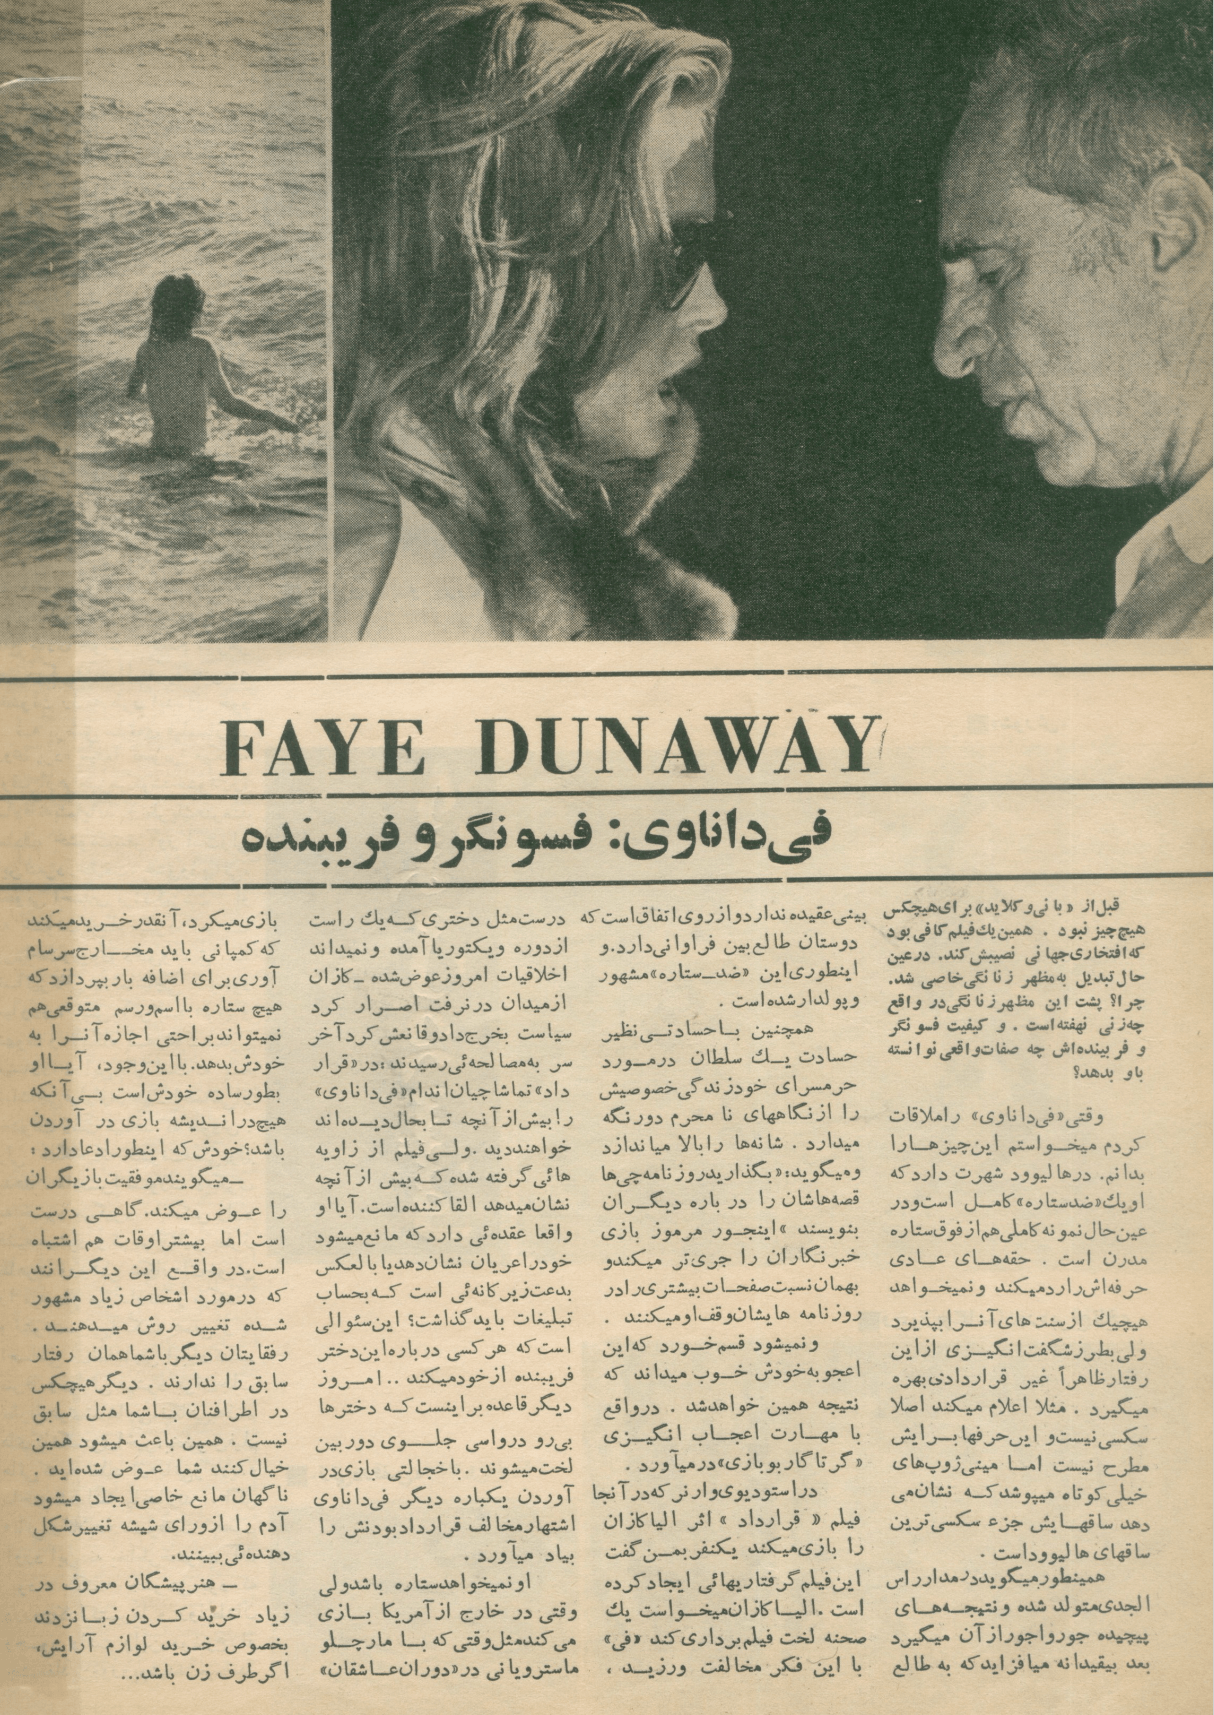 Cinema Star (April 9, 1969) - KHAJISTAN™